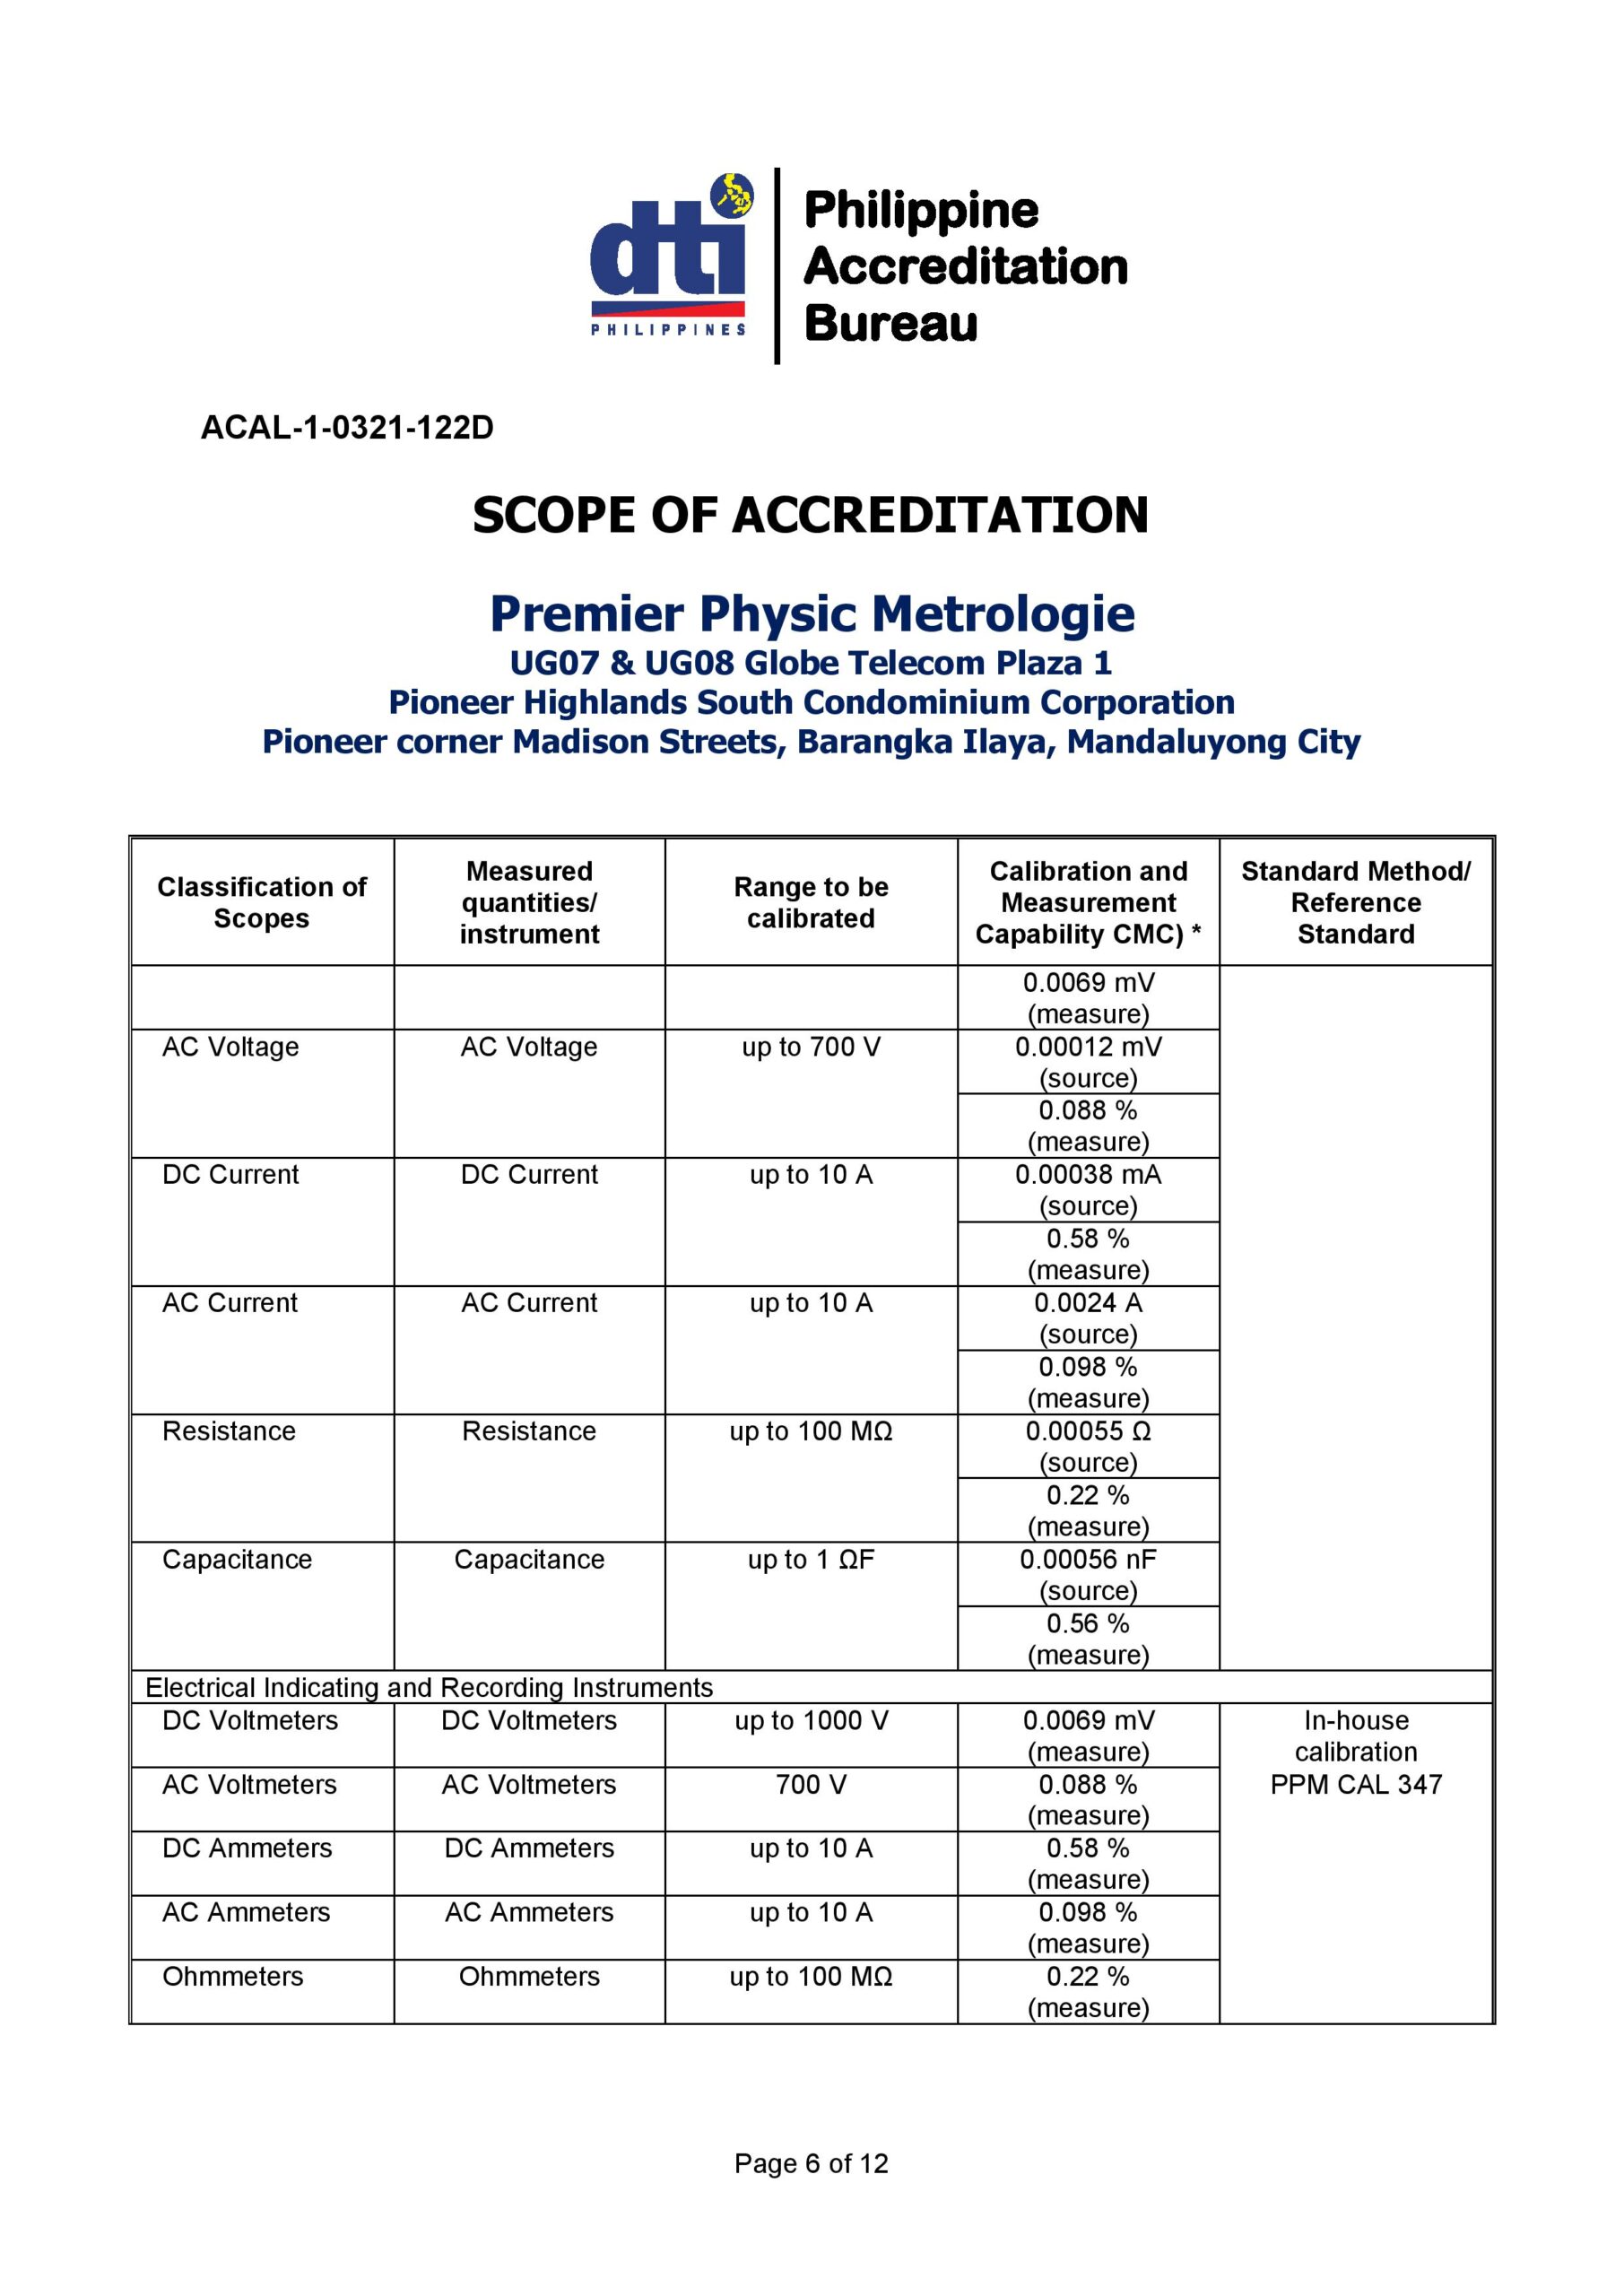 Premier Physic Metrologie - Scope of Accreditation 6